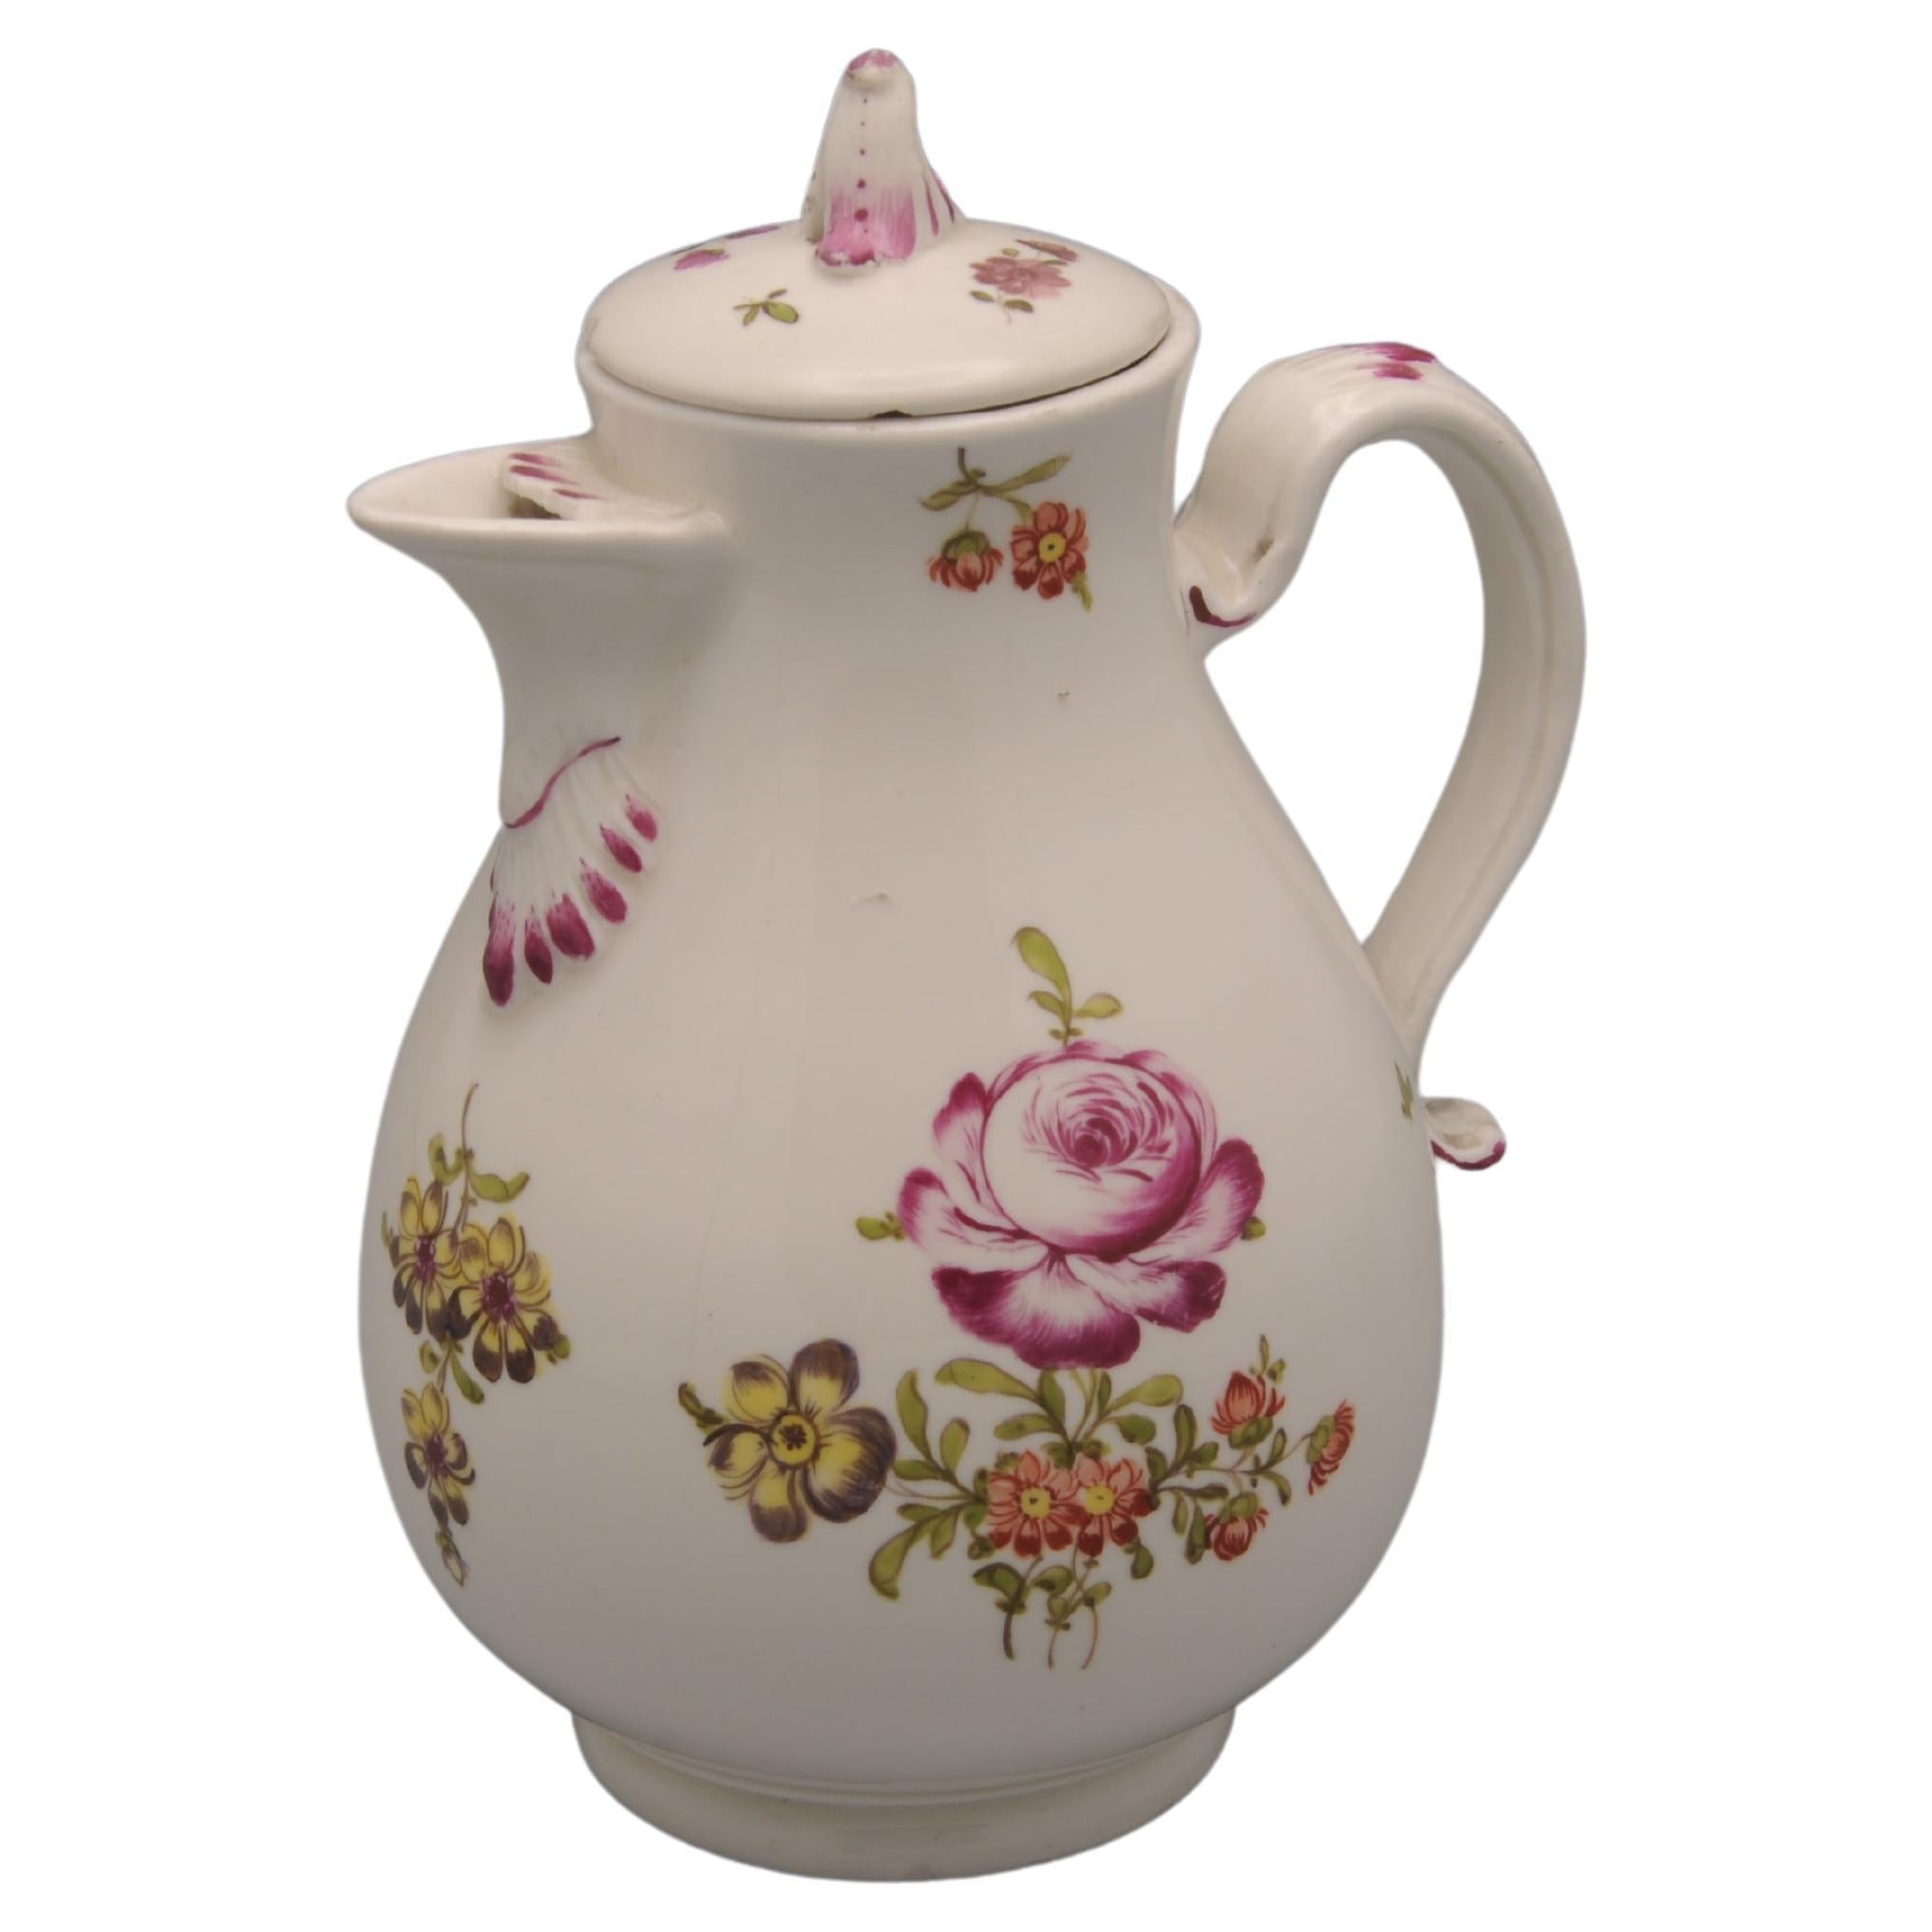 Vienna Porcelain - Rococo Coffeepot, late 18th century